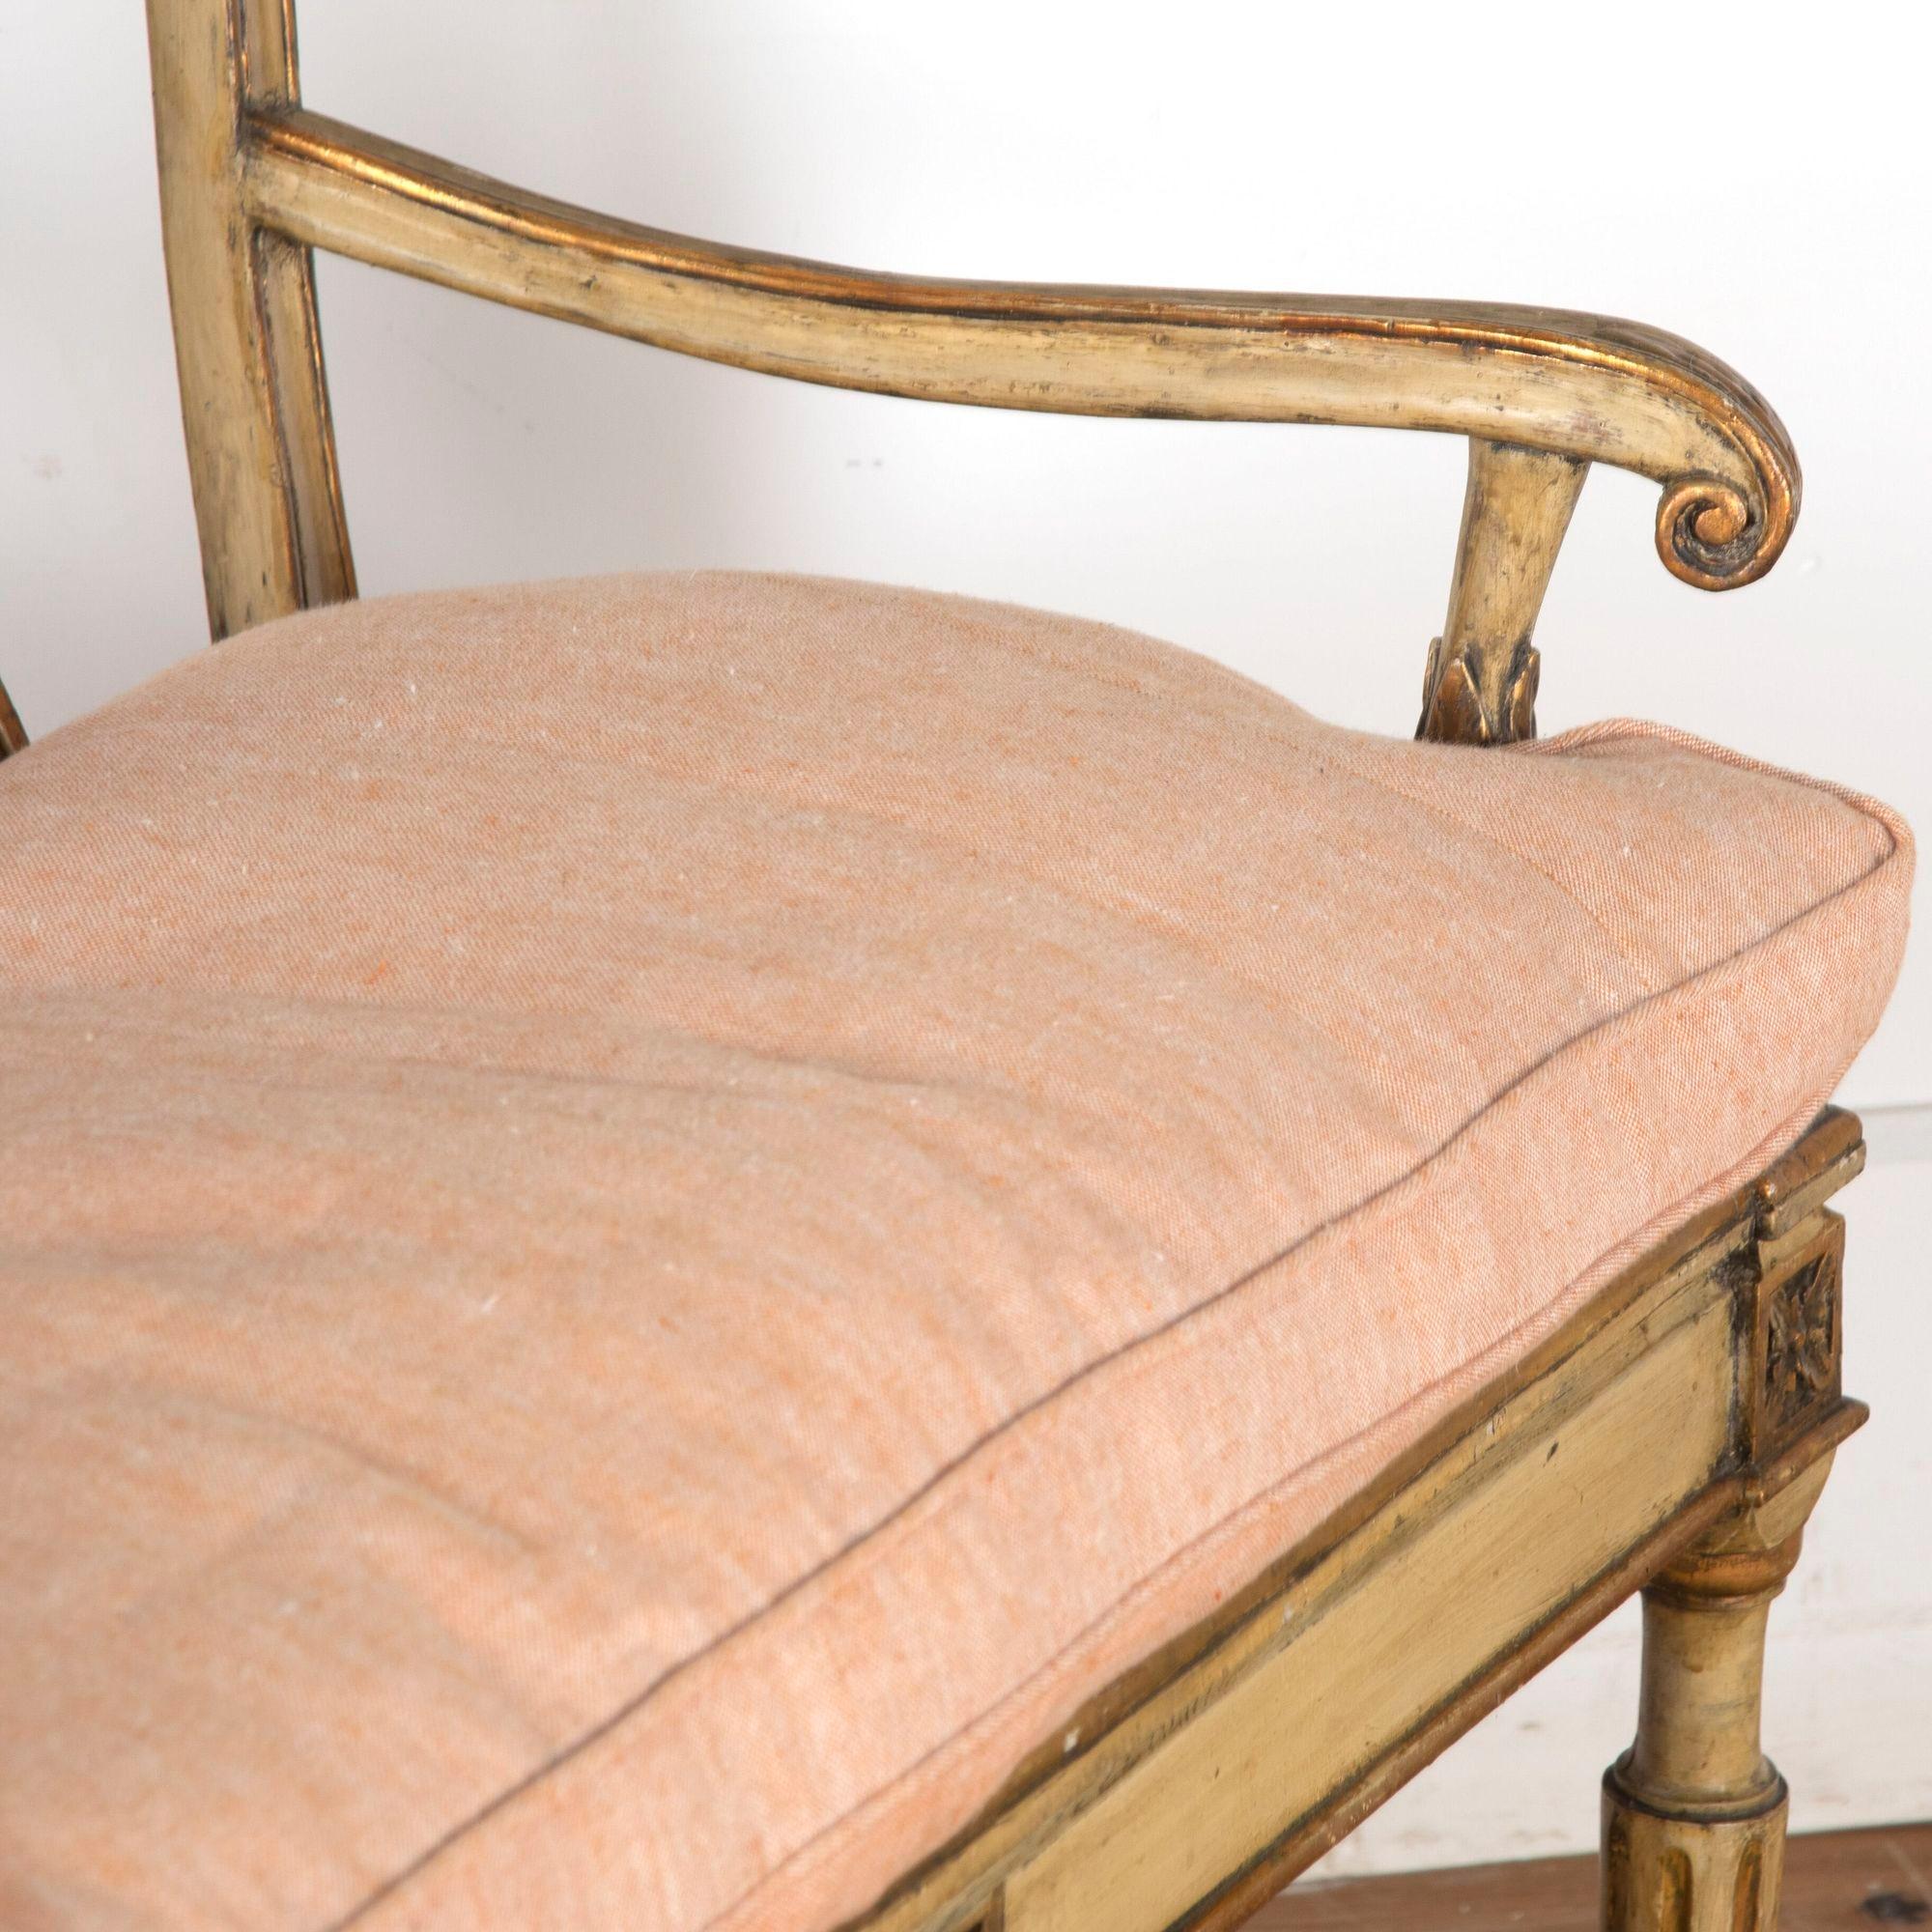 Mid 19th Century Swedish suite of painted furniture.
Sofa measurements;
Height - 100cm
Width - 101cm
Depth - 50cm
Chair measurements;
Height - 98cm
Width - 60cm
Depth - 50cm.